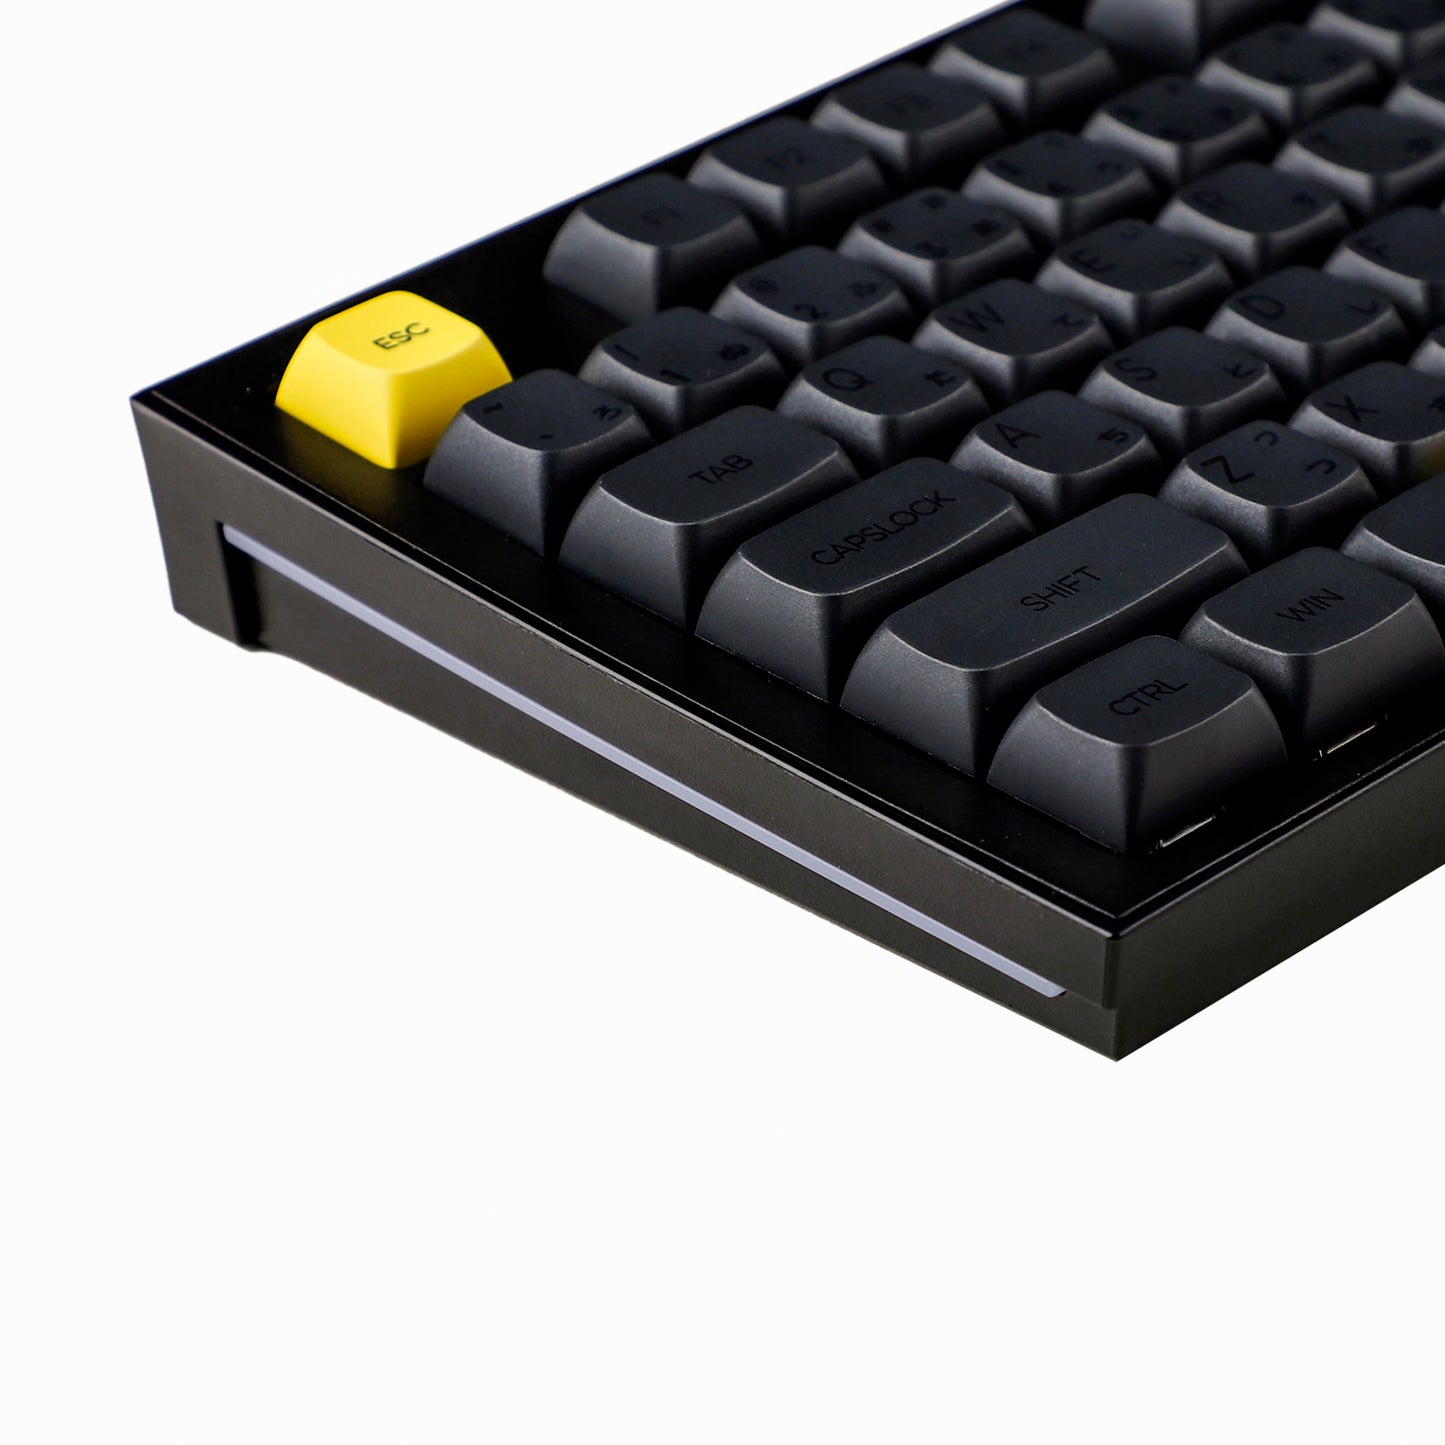 YMDK 125 ZDA Profile Gentleman Japanese XDA v2 Dye Sub PBT Yellow Gray Keycaps For 104 TKL 60% 96 84 68 64 MX Switches Keyboard